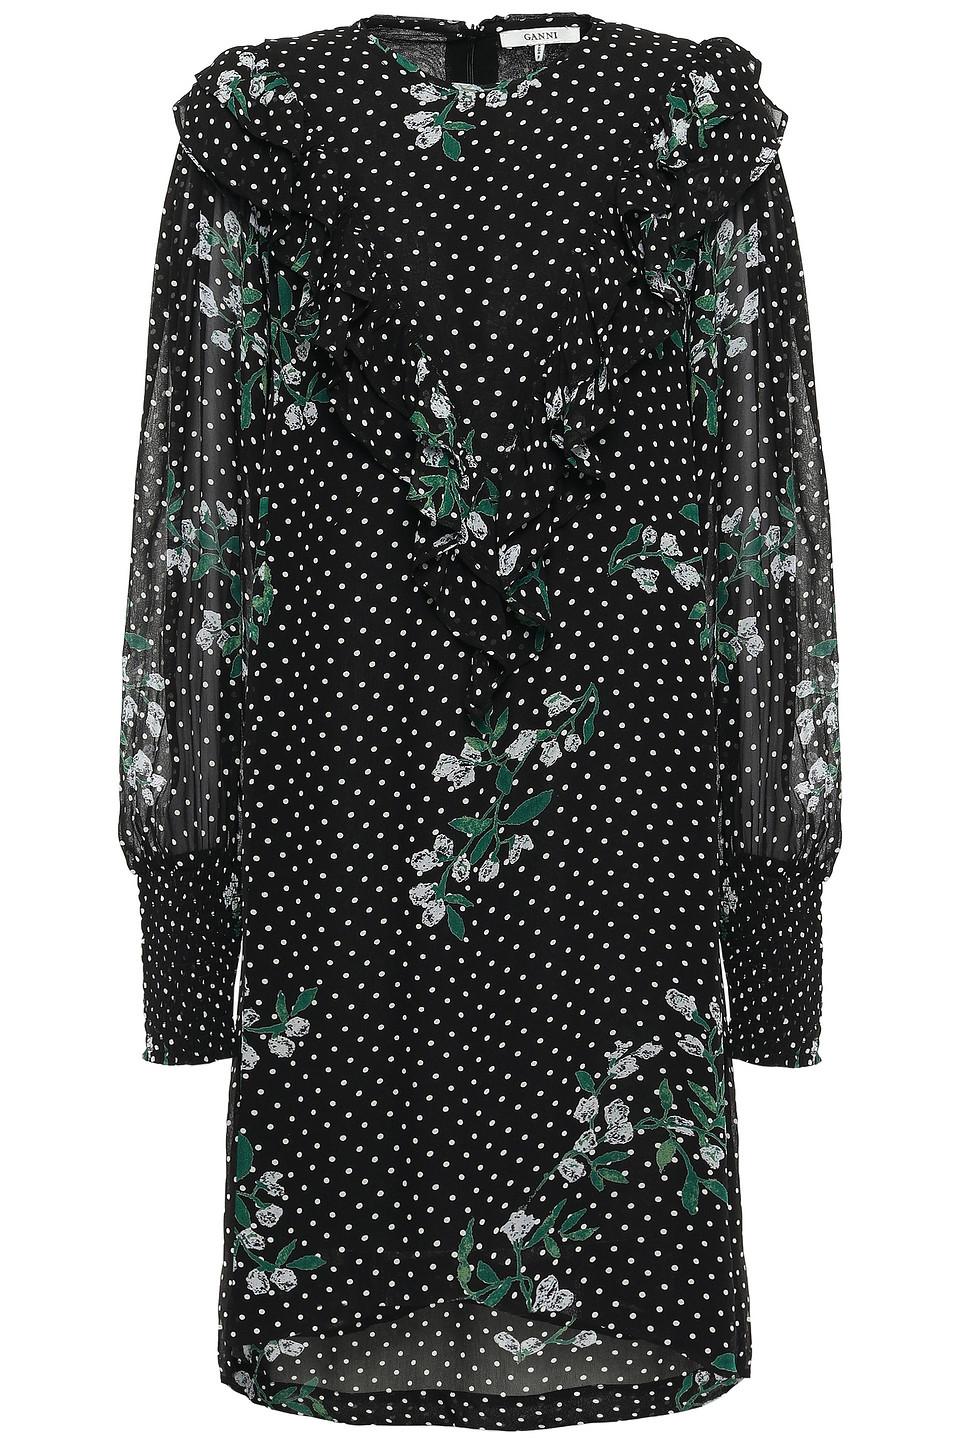 Ganni Synthetic Rometty Ruffled Printed Georgette Dress in Black - Lyst